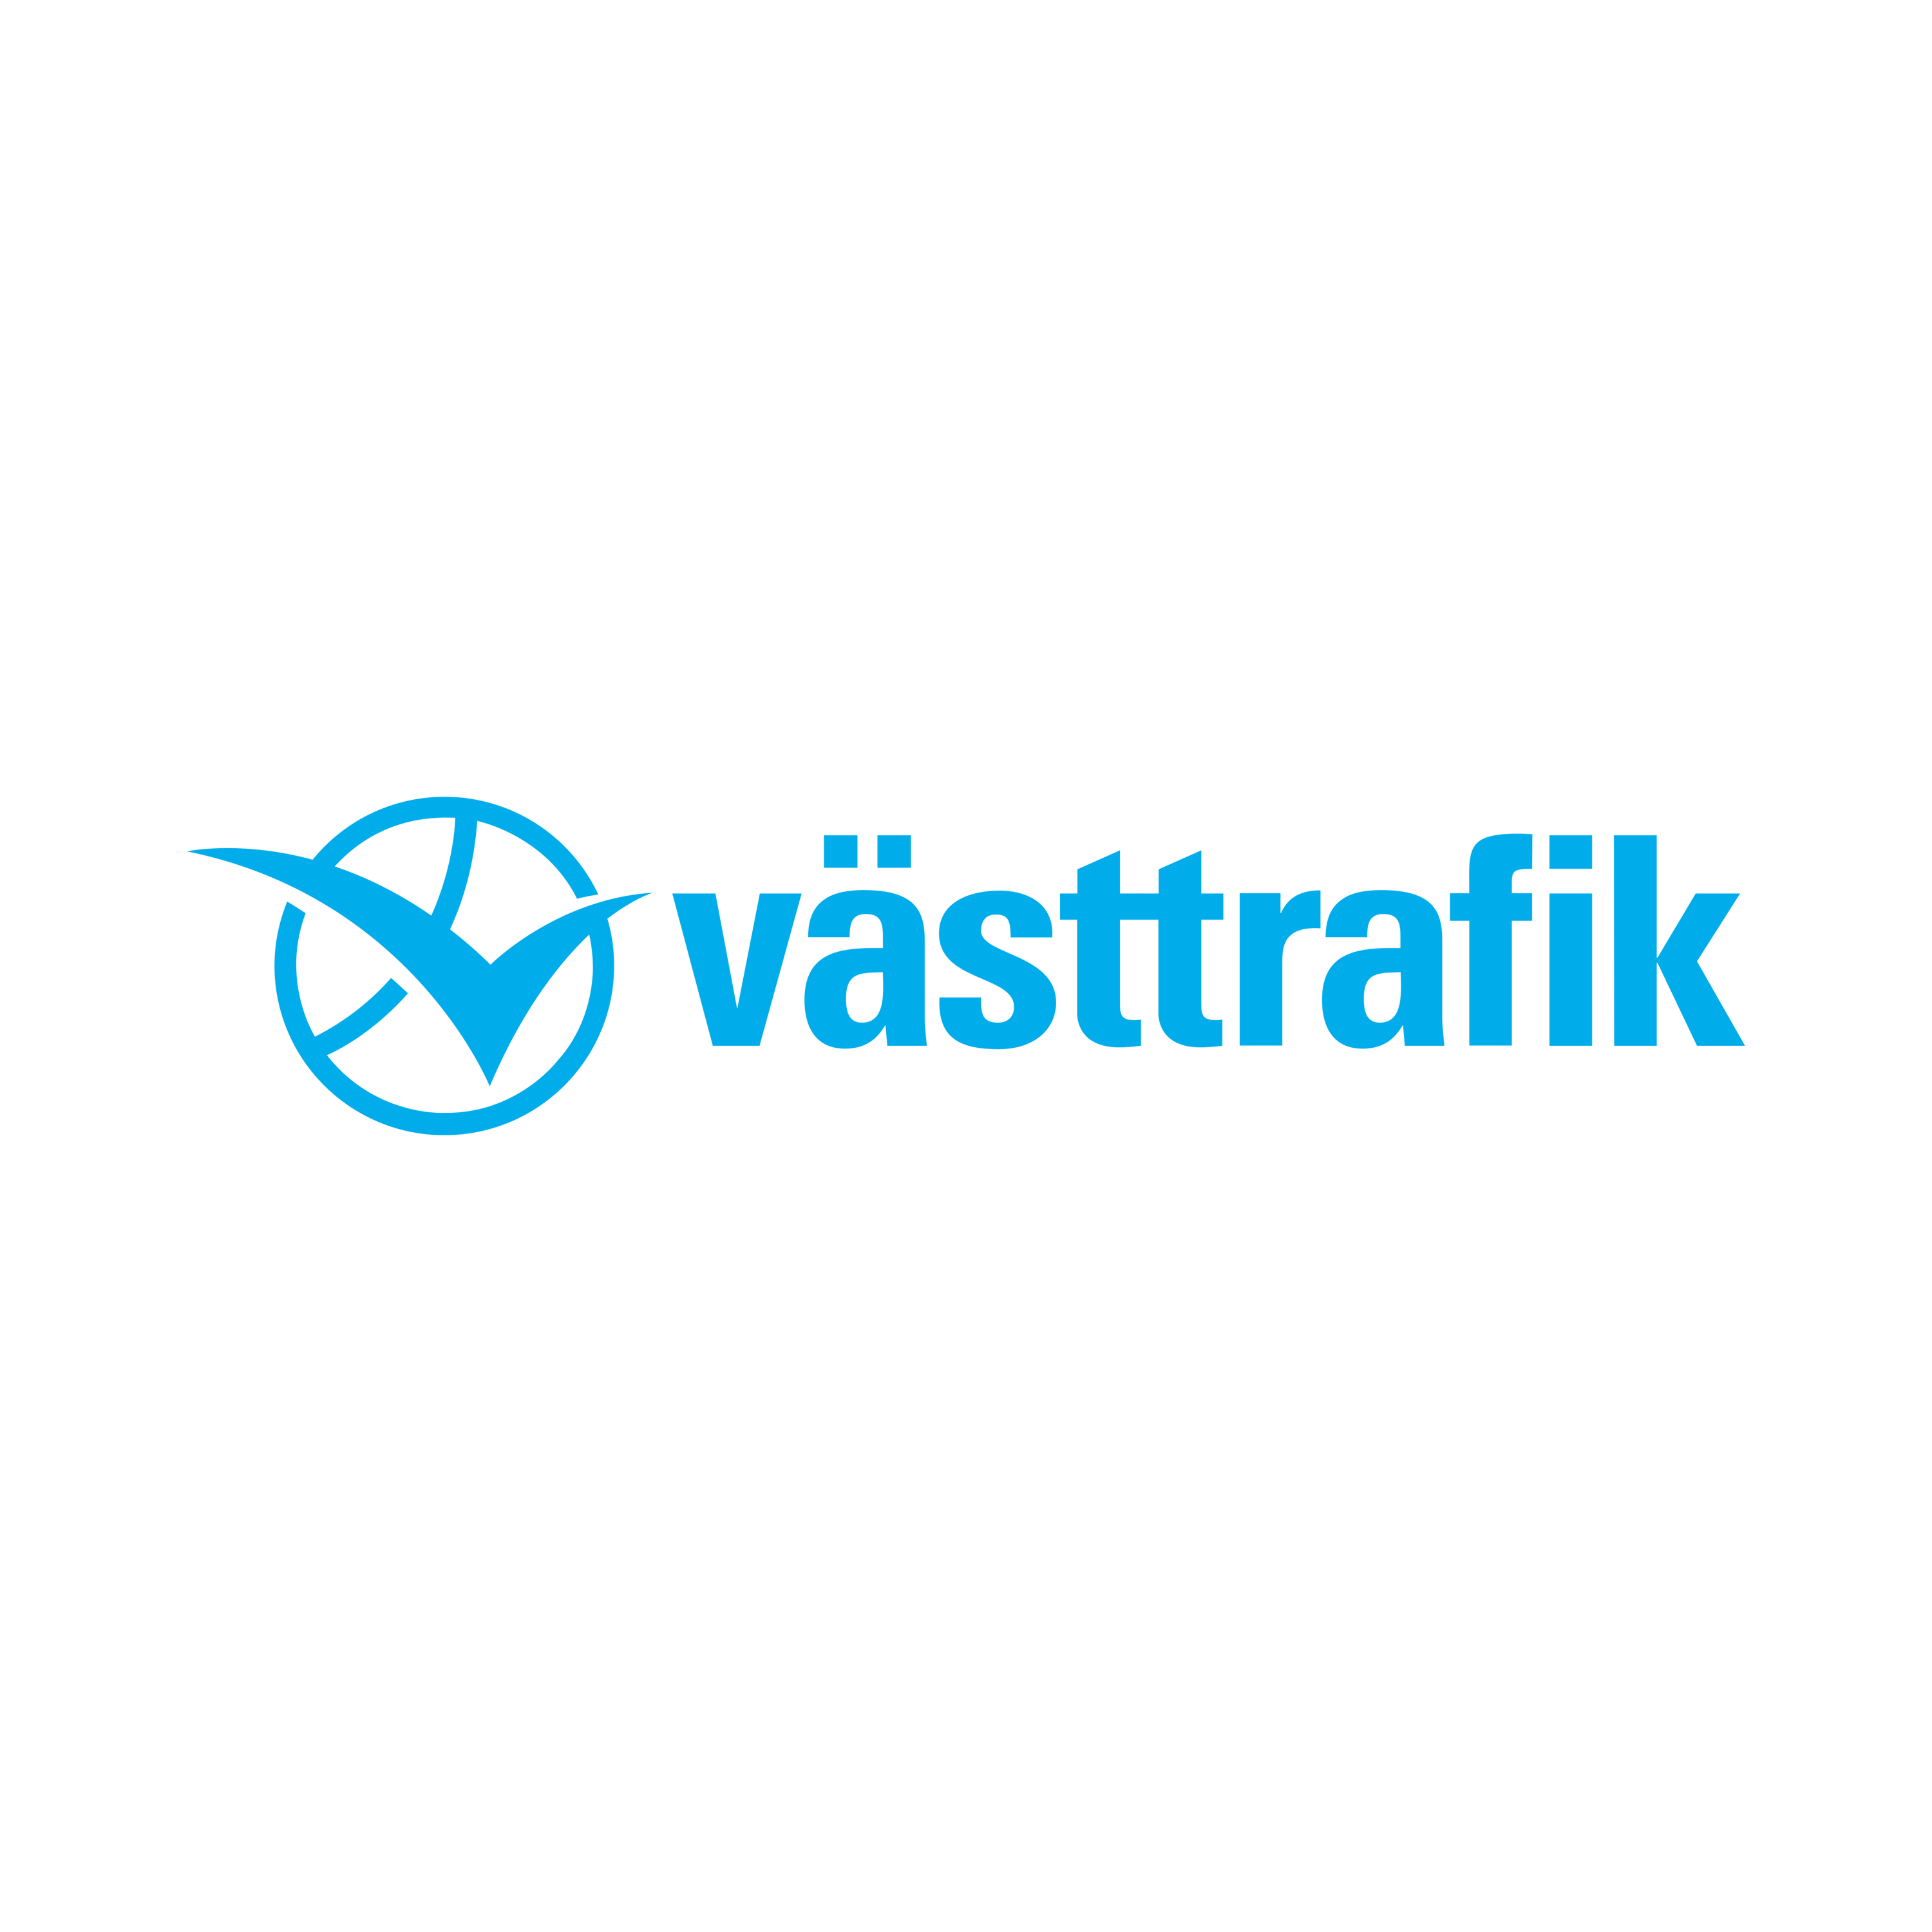 Vasttrafik Logo Transparent Picture